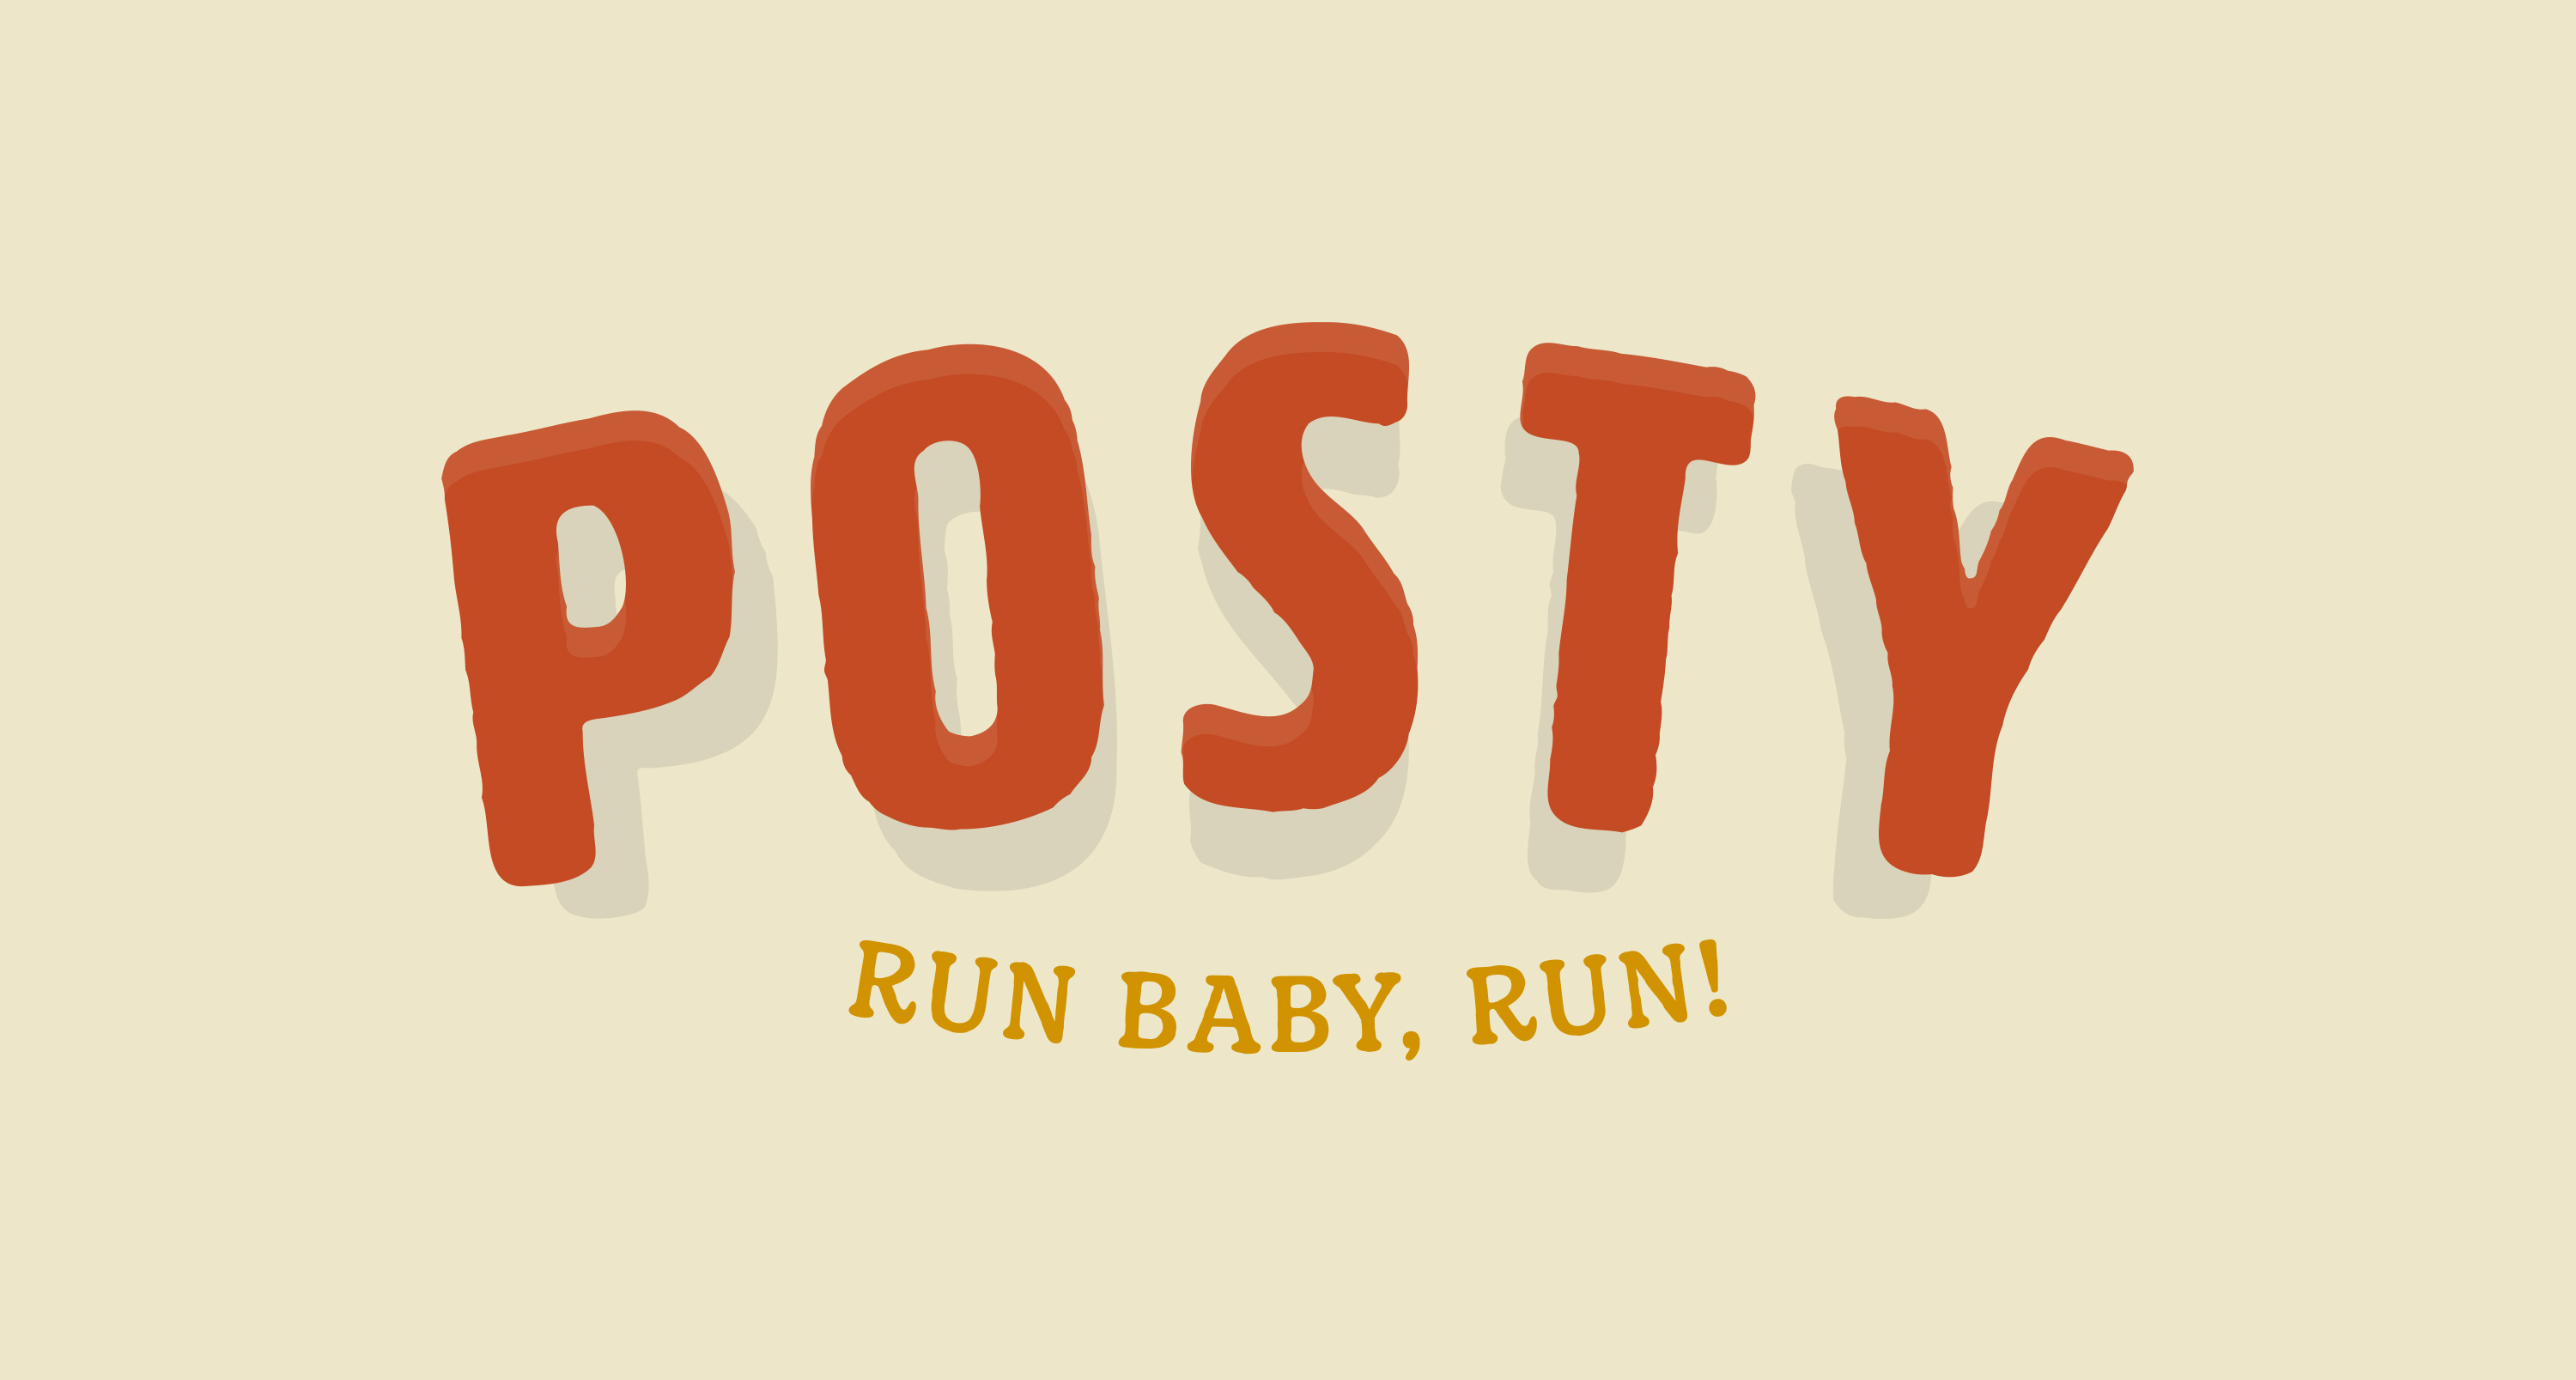 Posty Run Mobile App